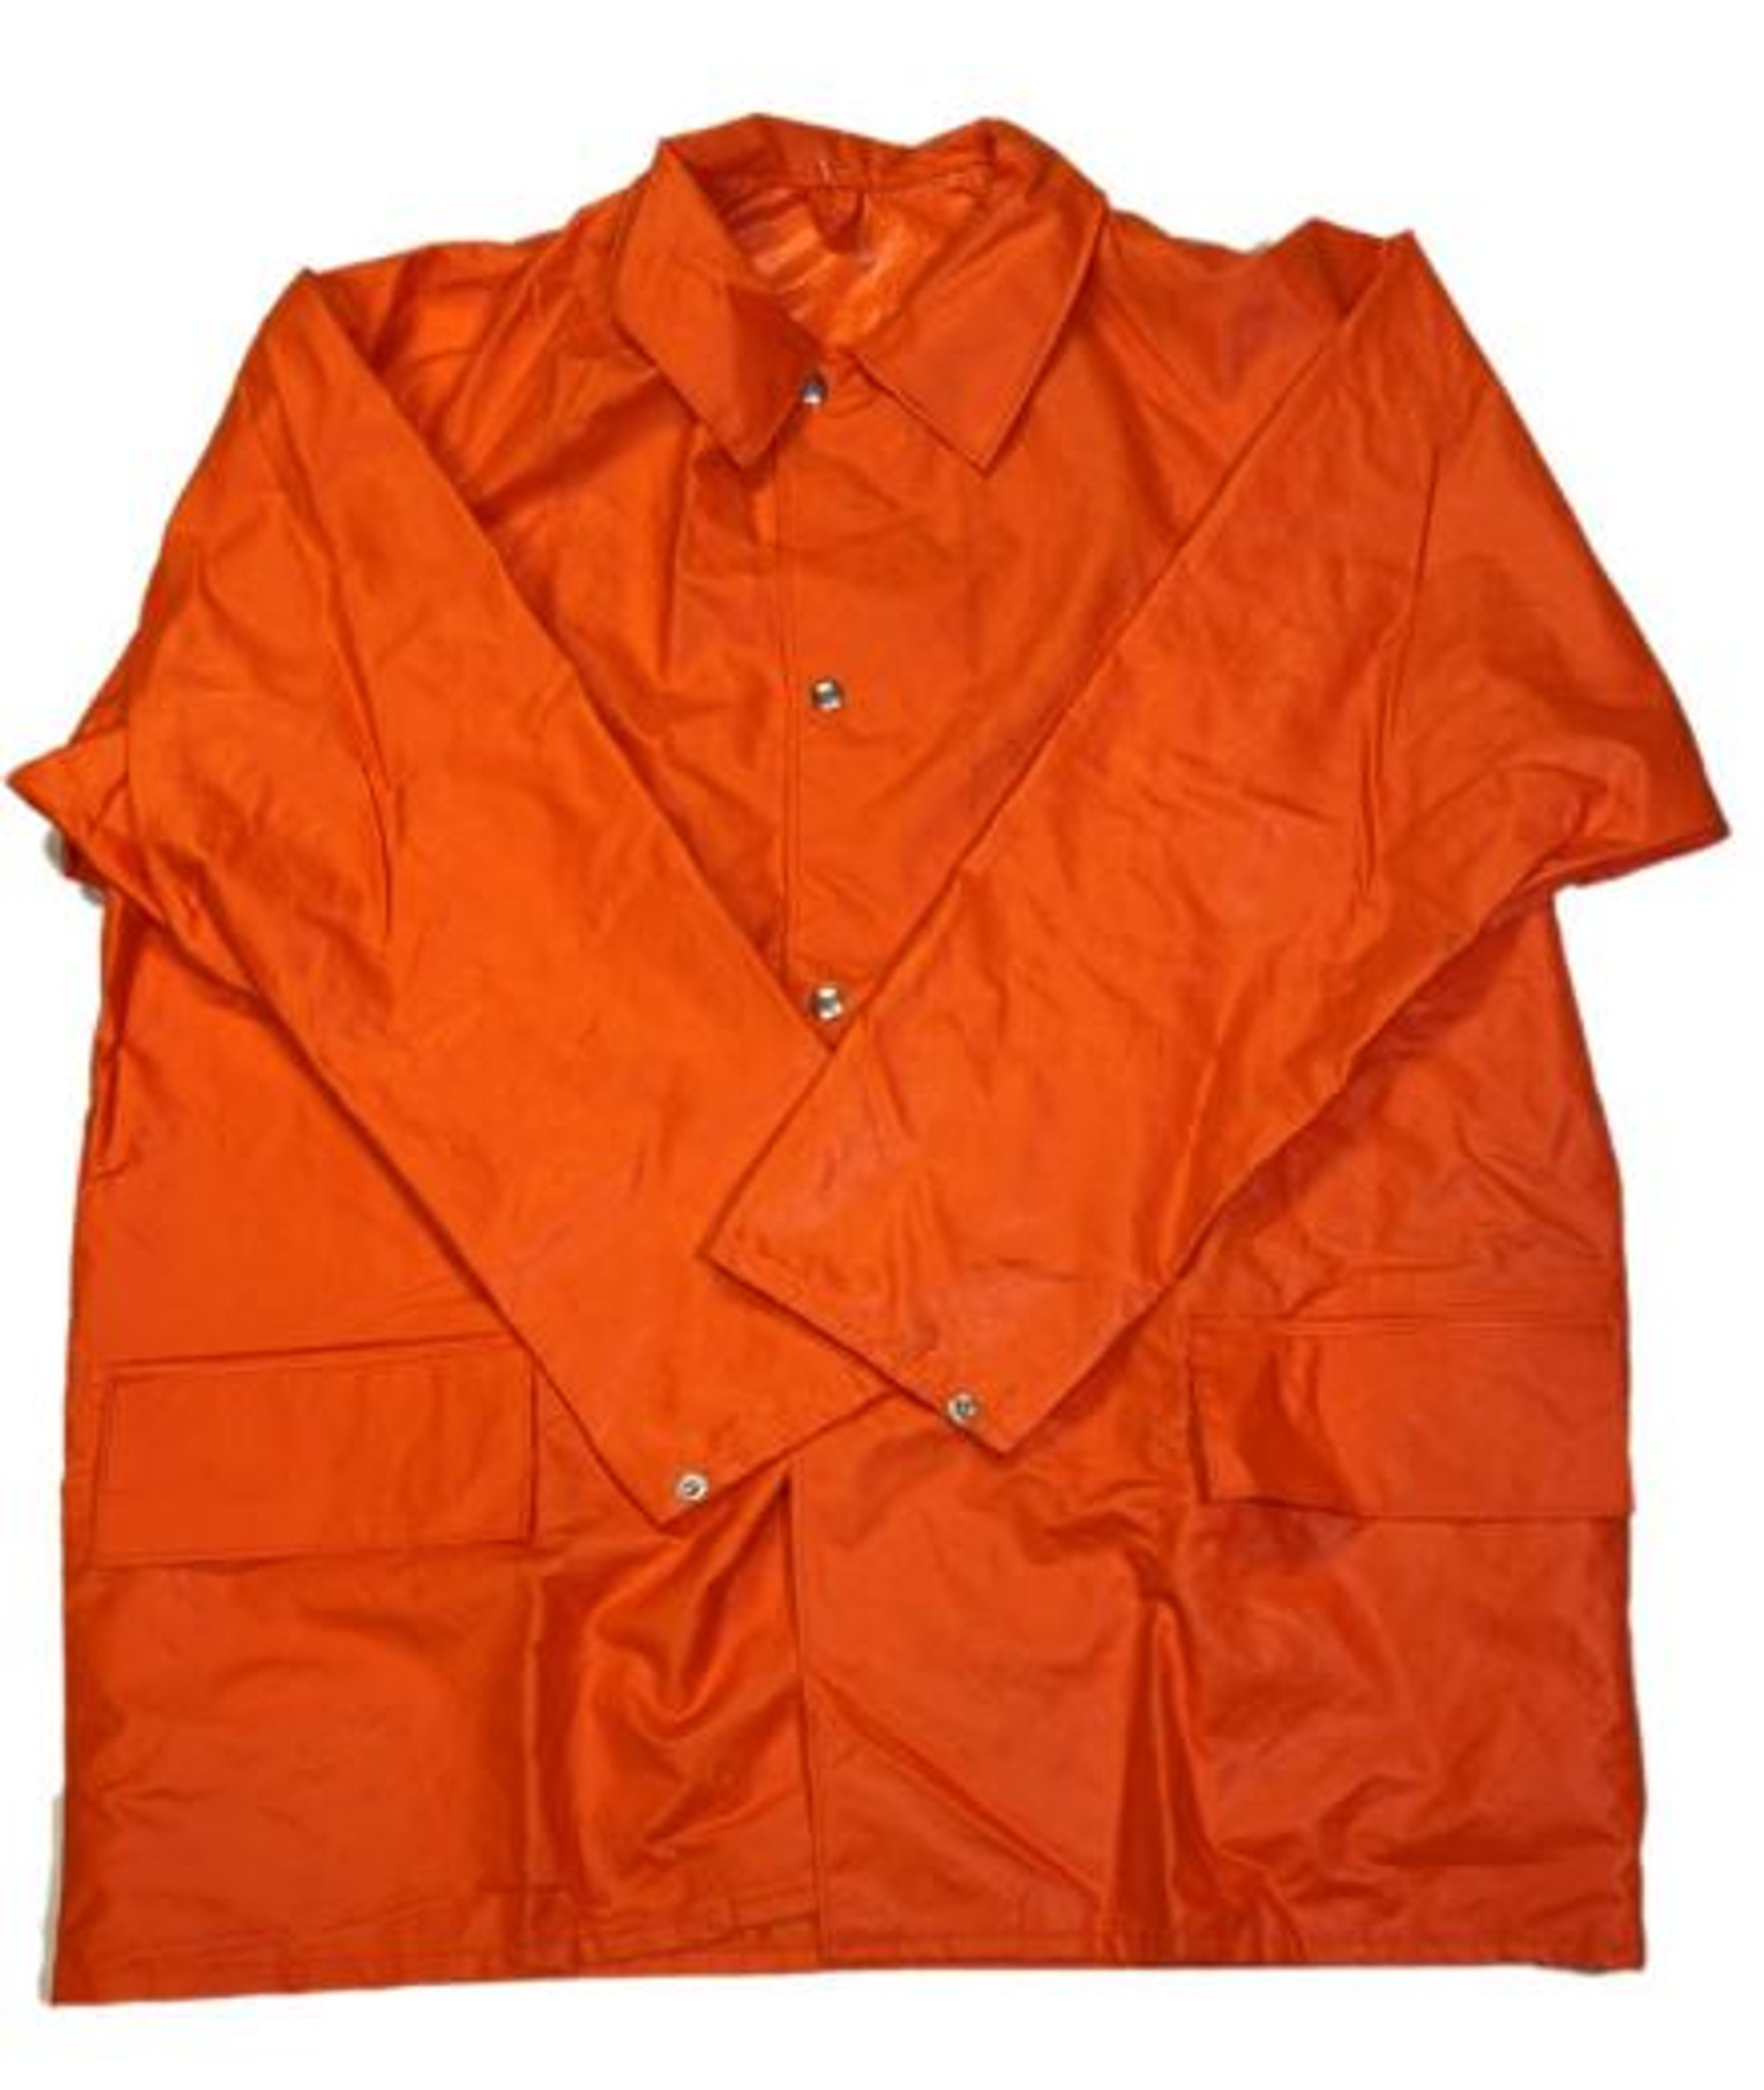 German Armed Forces Orange Rubberized Wet Weather Jacket